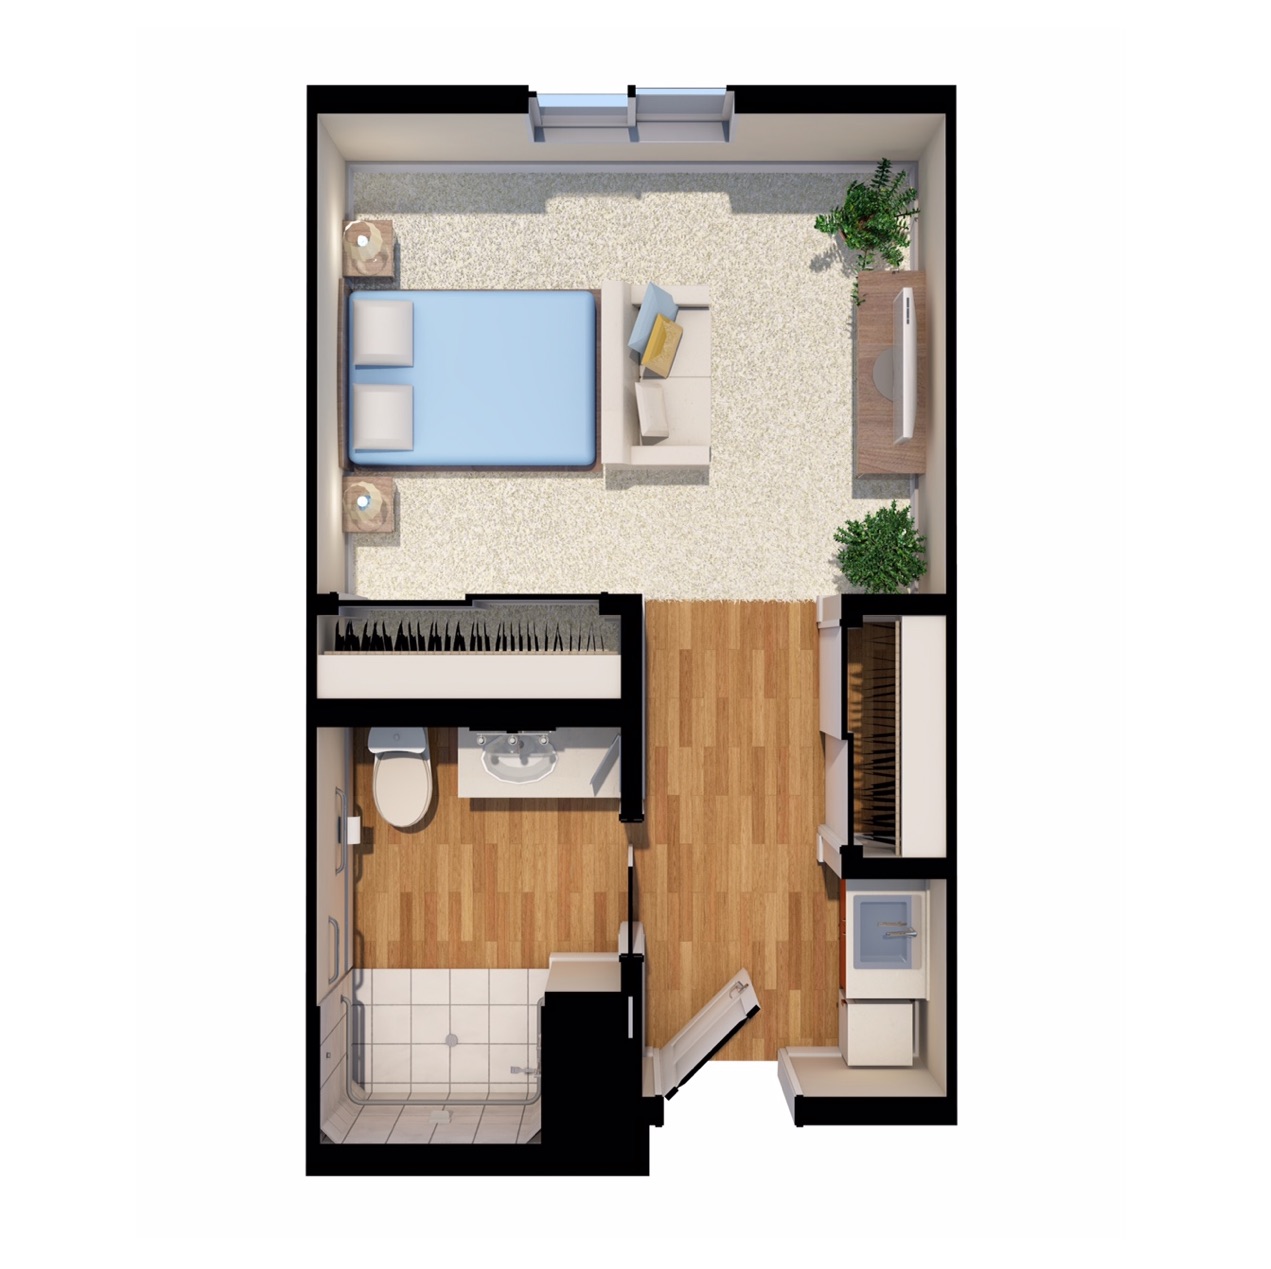 Floor plan for an assisted living studio room at Aqua Ridge of Montclair.